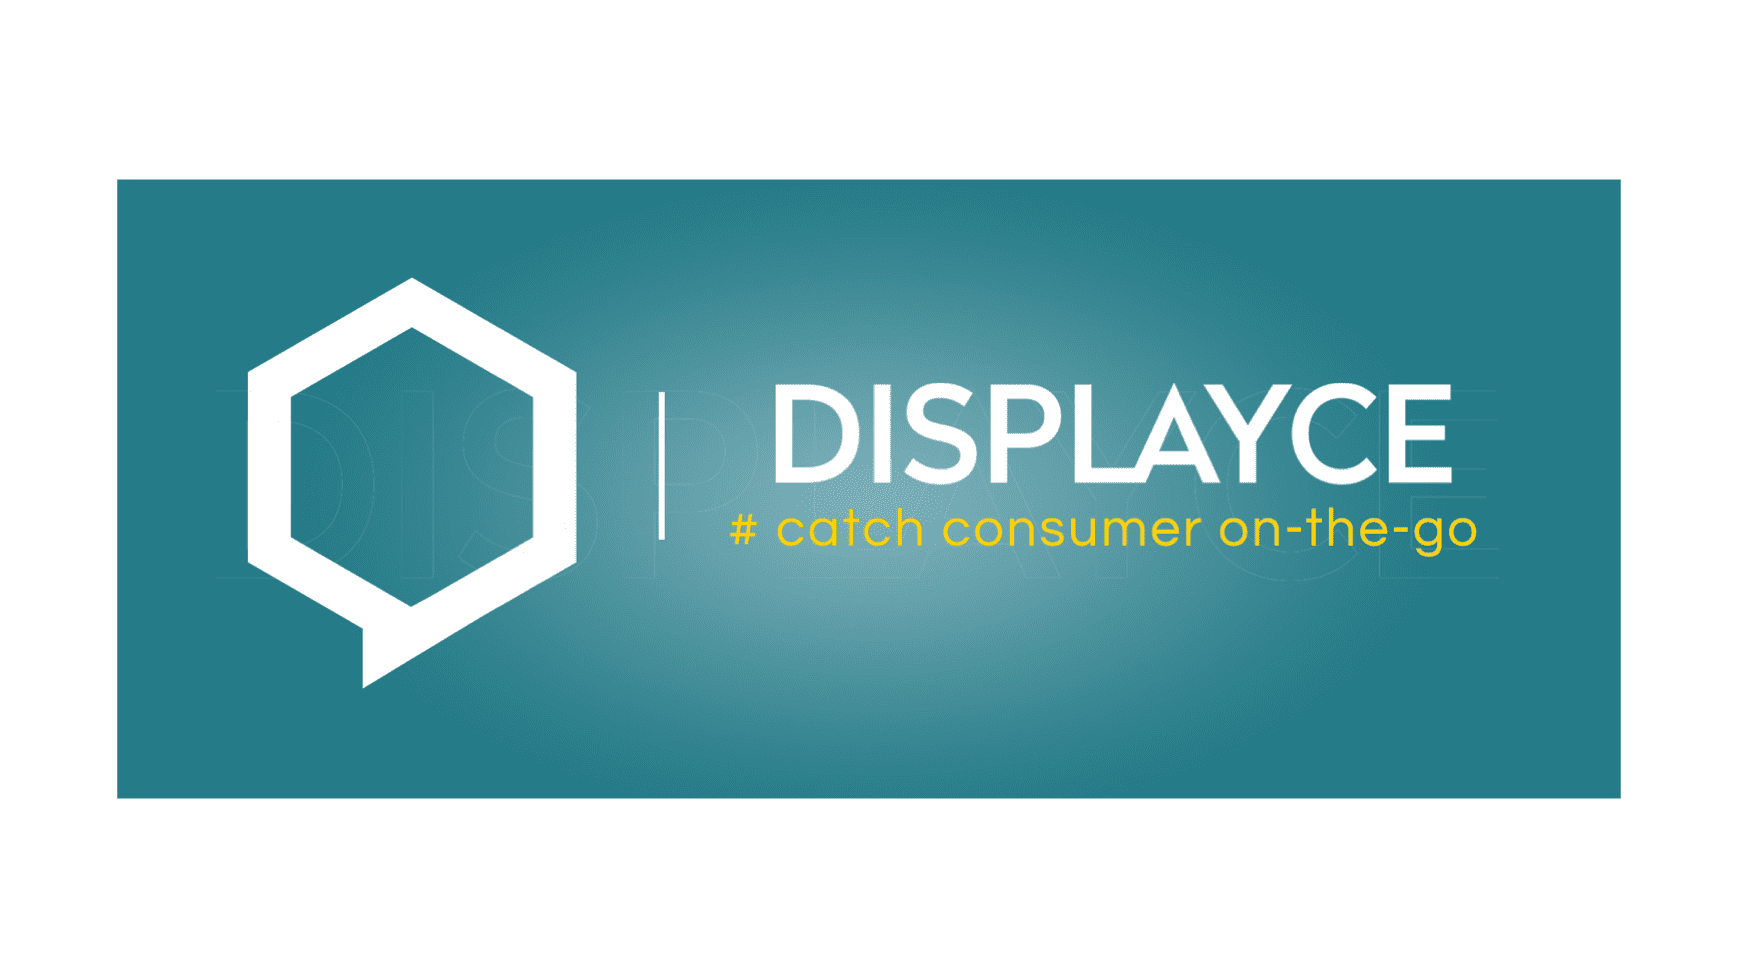 Digital Place Based Advertising Association Adds Another Global Member: Displayce, France-based Programmatic Platform